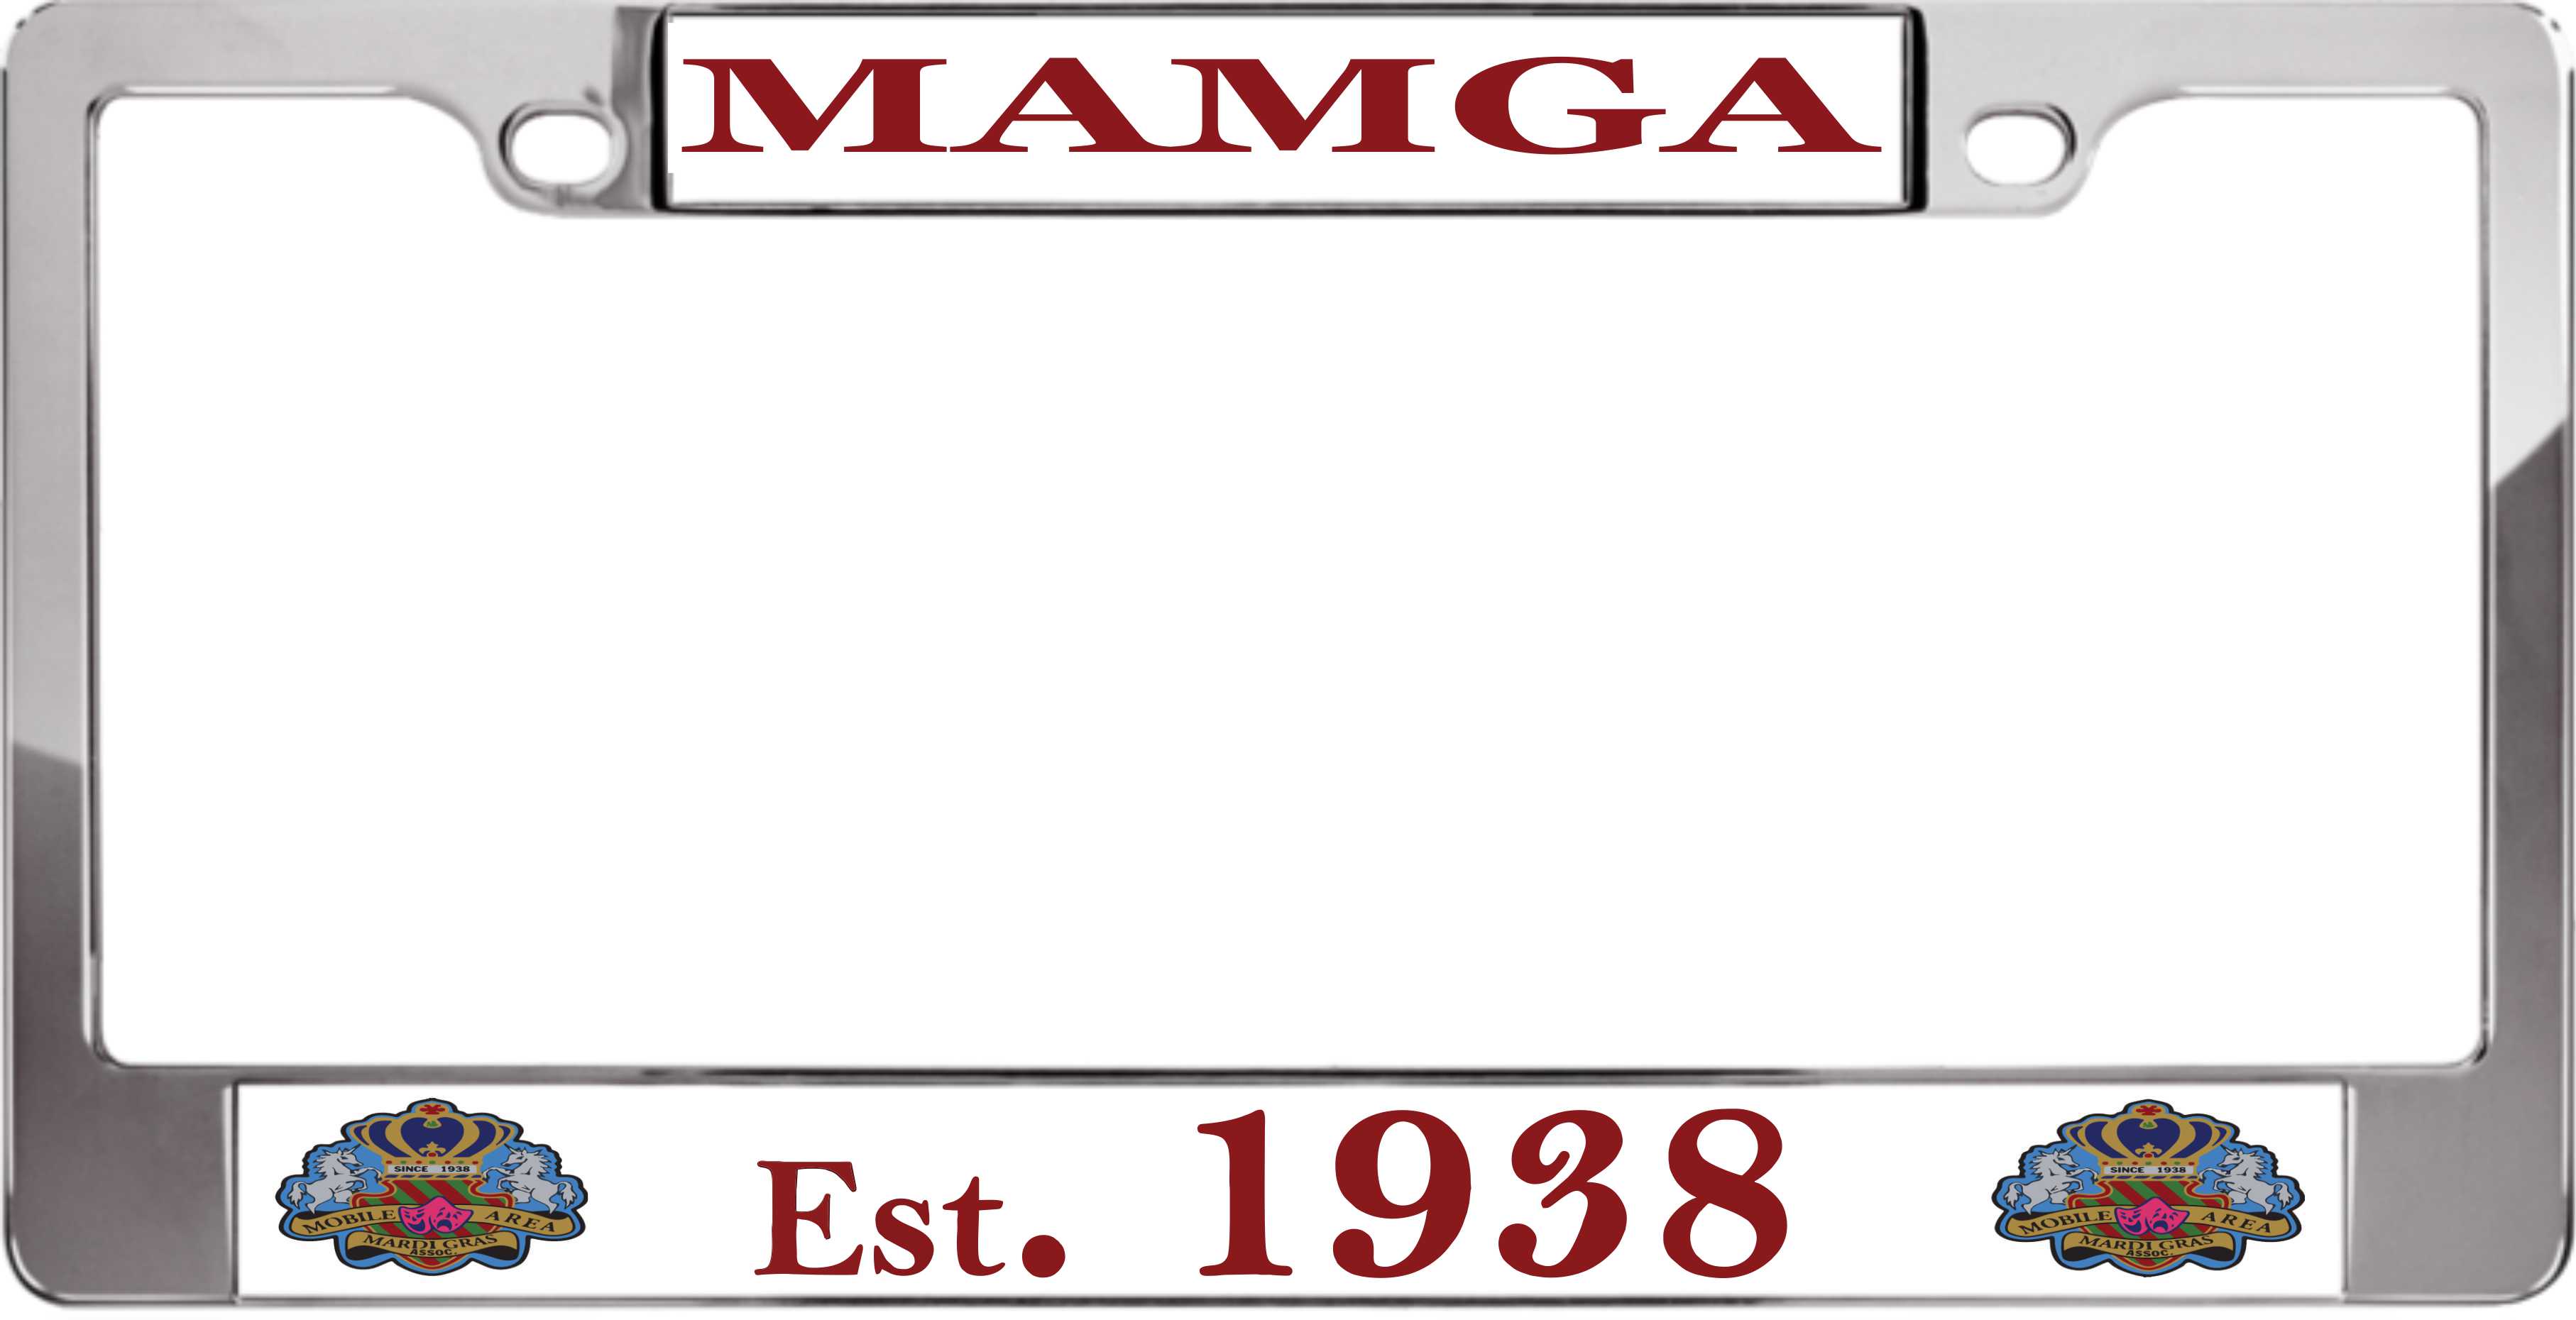 MAMGA -2 - custom license plate frame